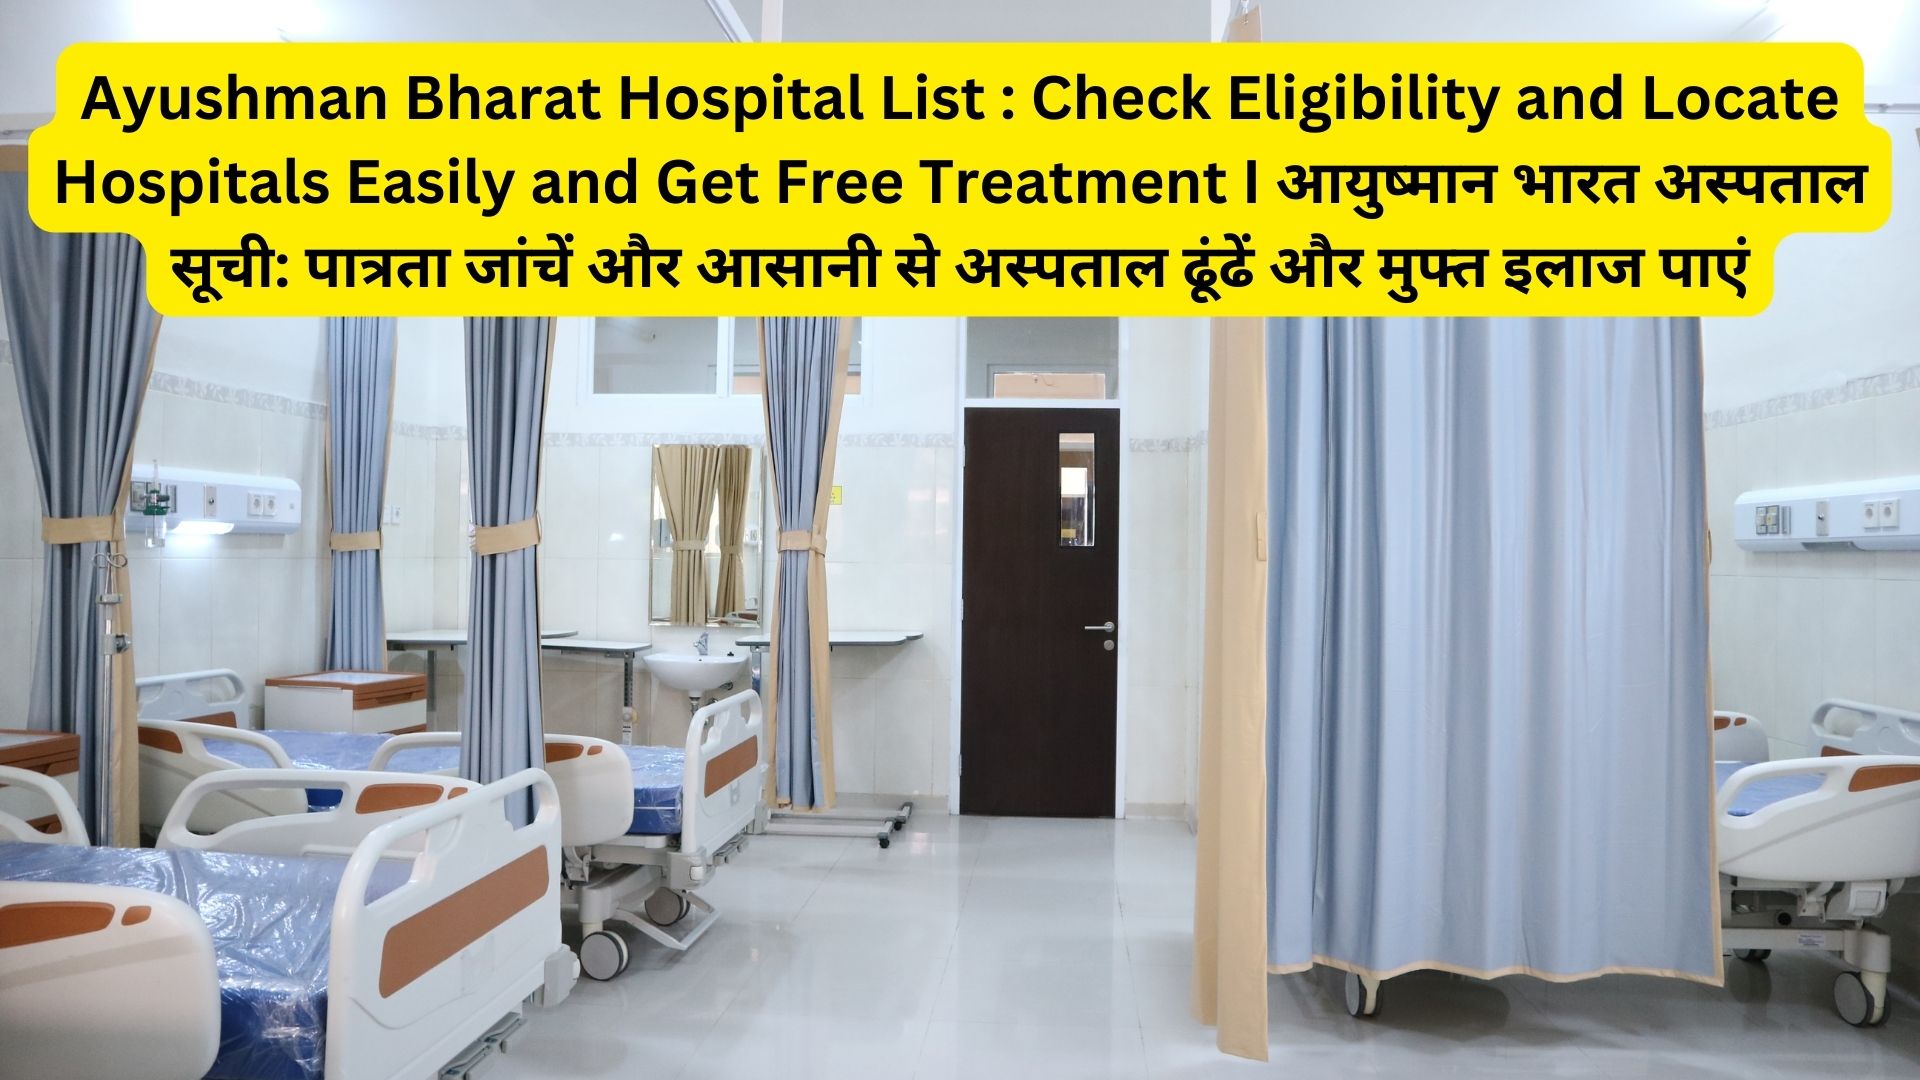 Ayushman Bharat Hospital List : Check Eligibility and Locate Hospitals Easily and Get Free Treatment I आयुष्मान भारत अस्पताल सूची: पात्रता जांचें और आसानी से अस्पताल ढूंढें और मुफ्त इलाज पाएं